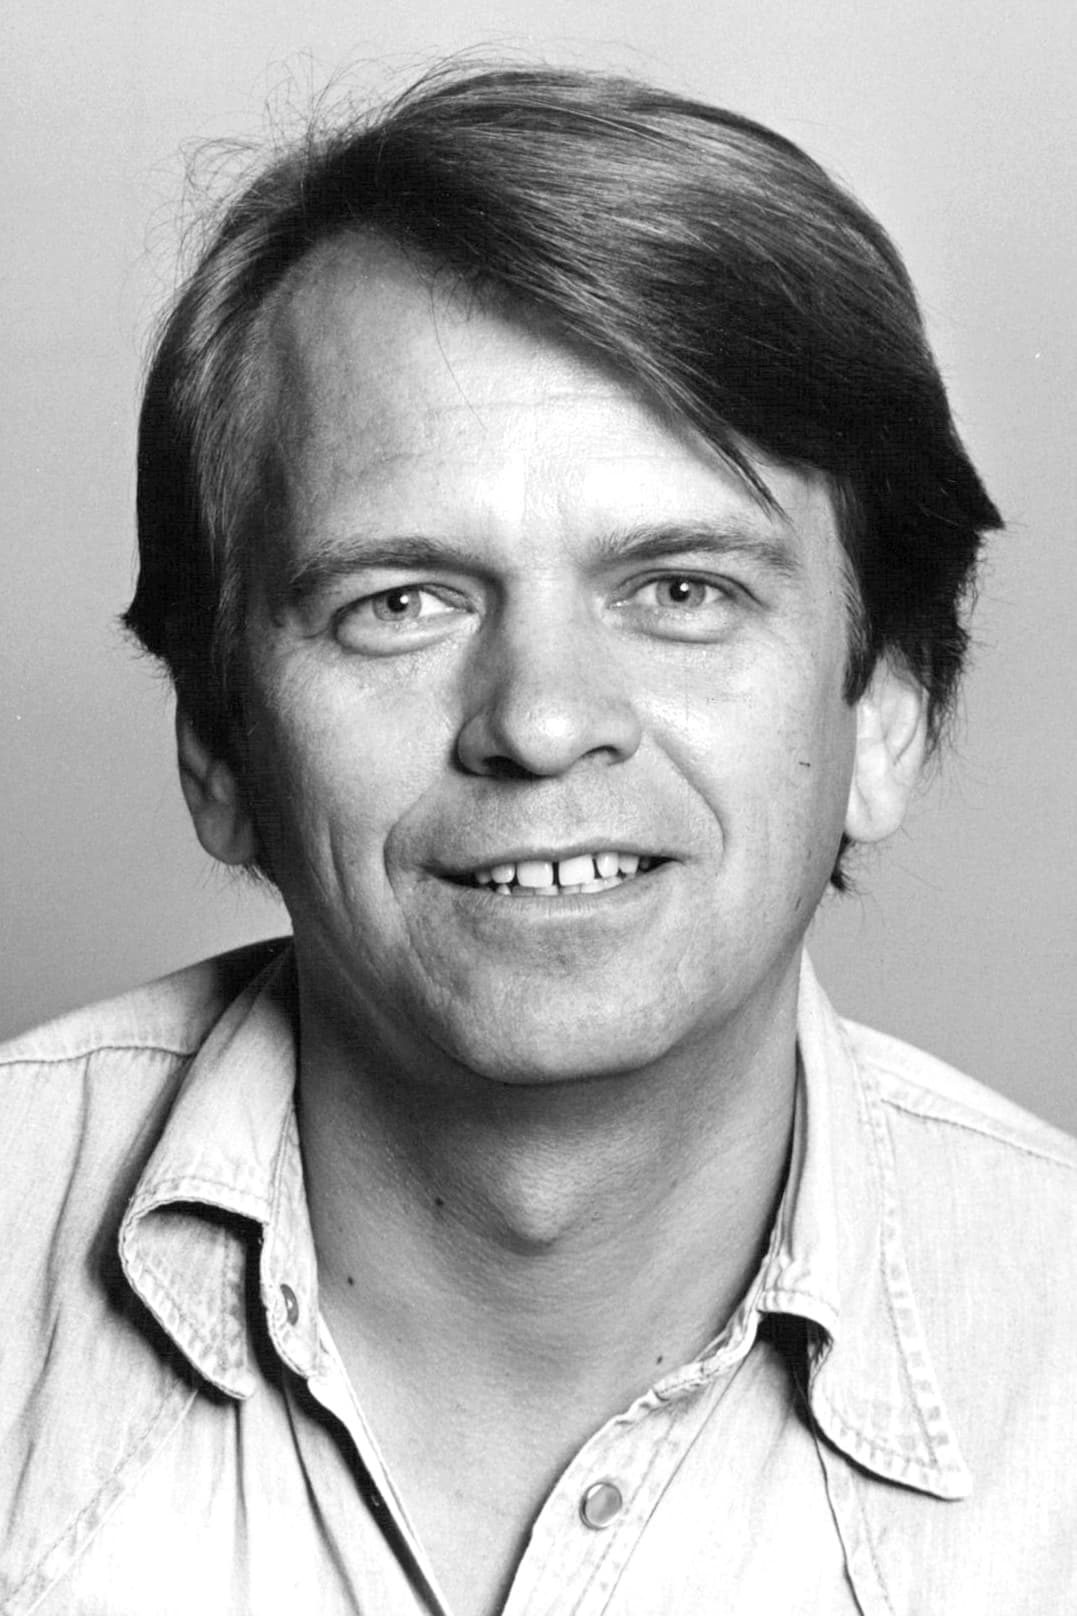 Björn Strand